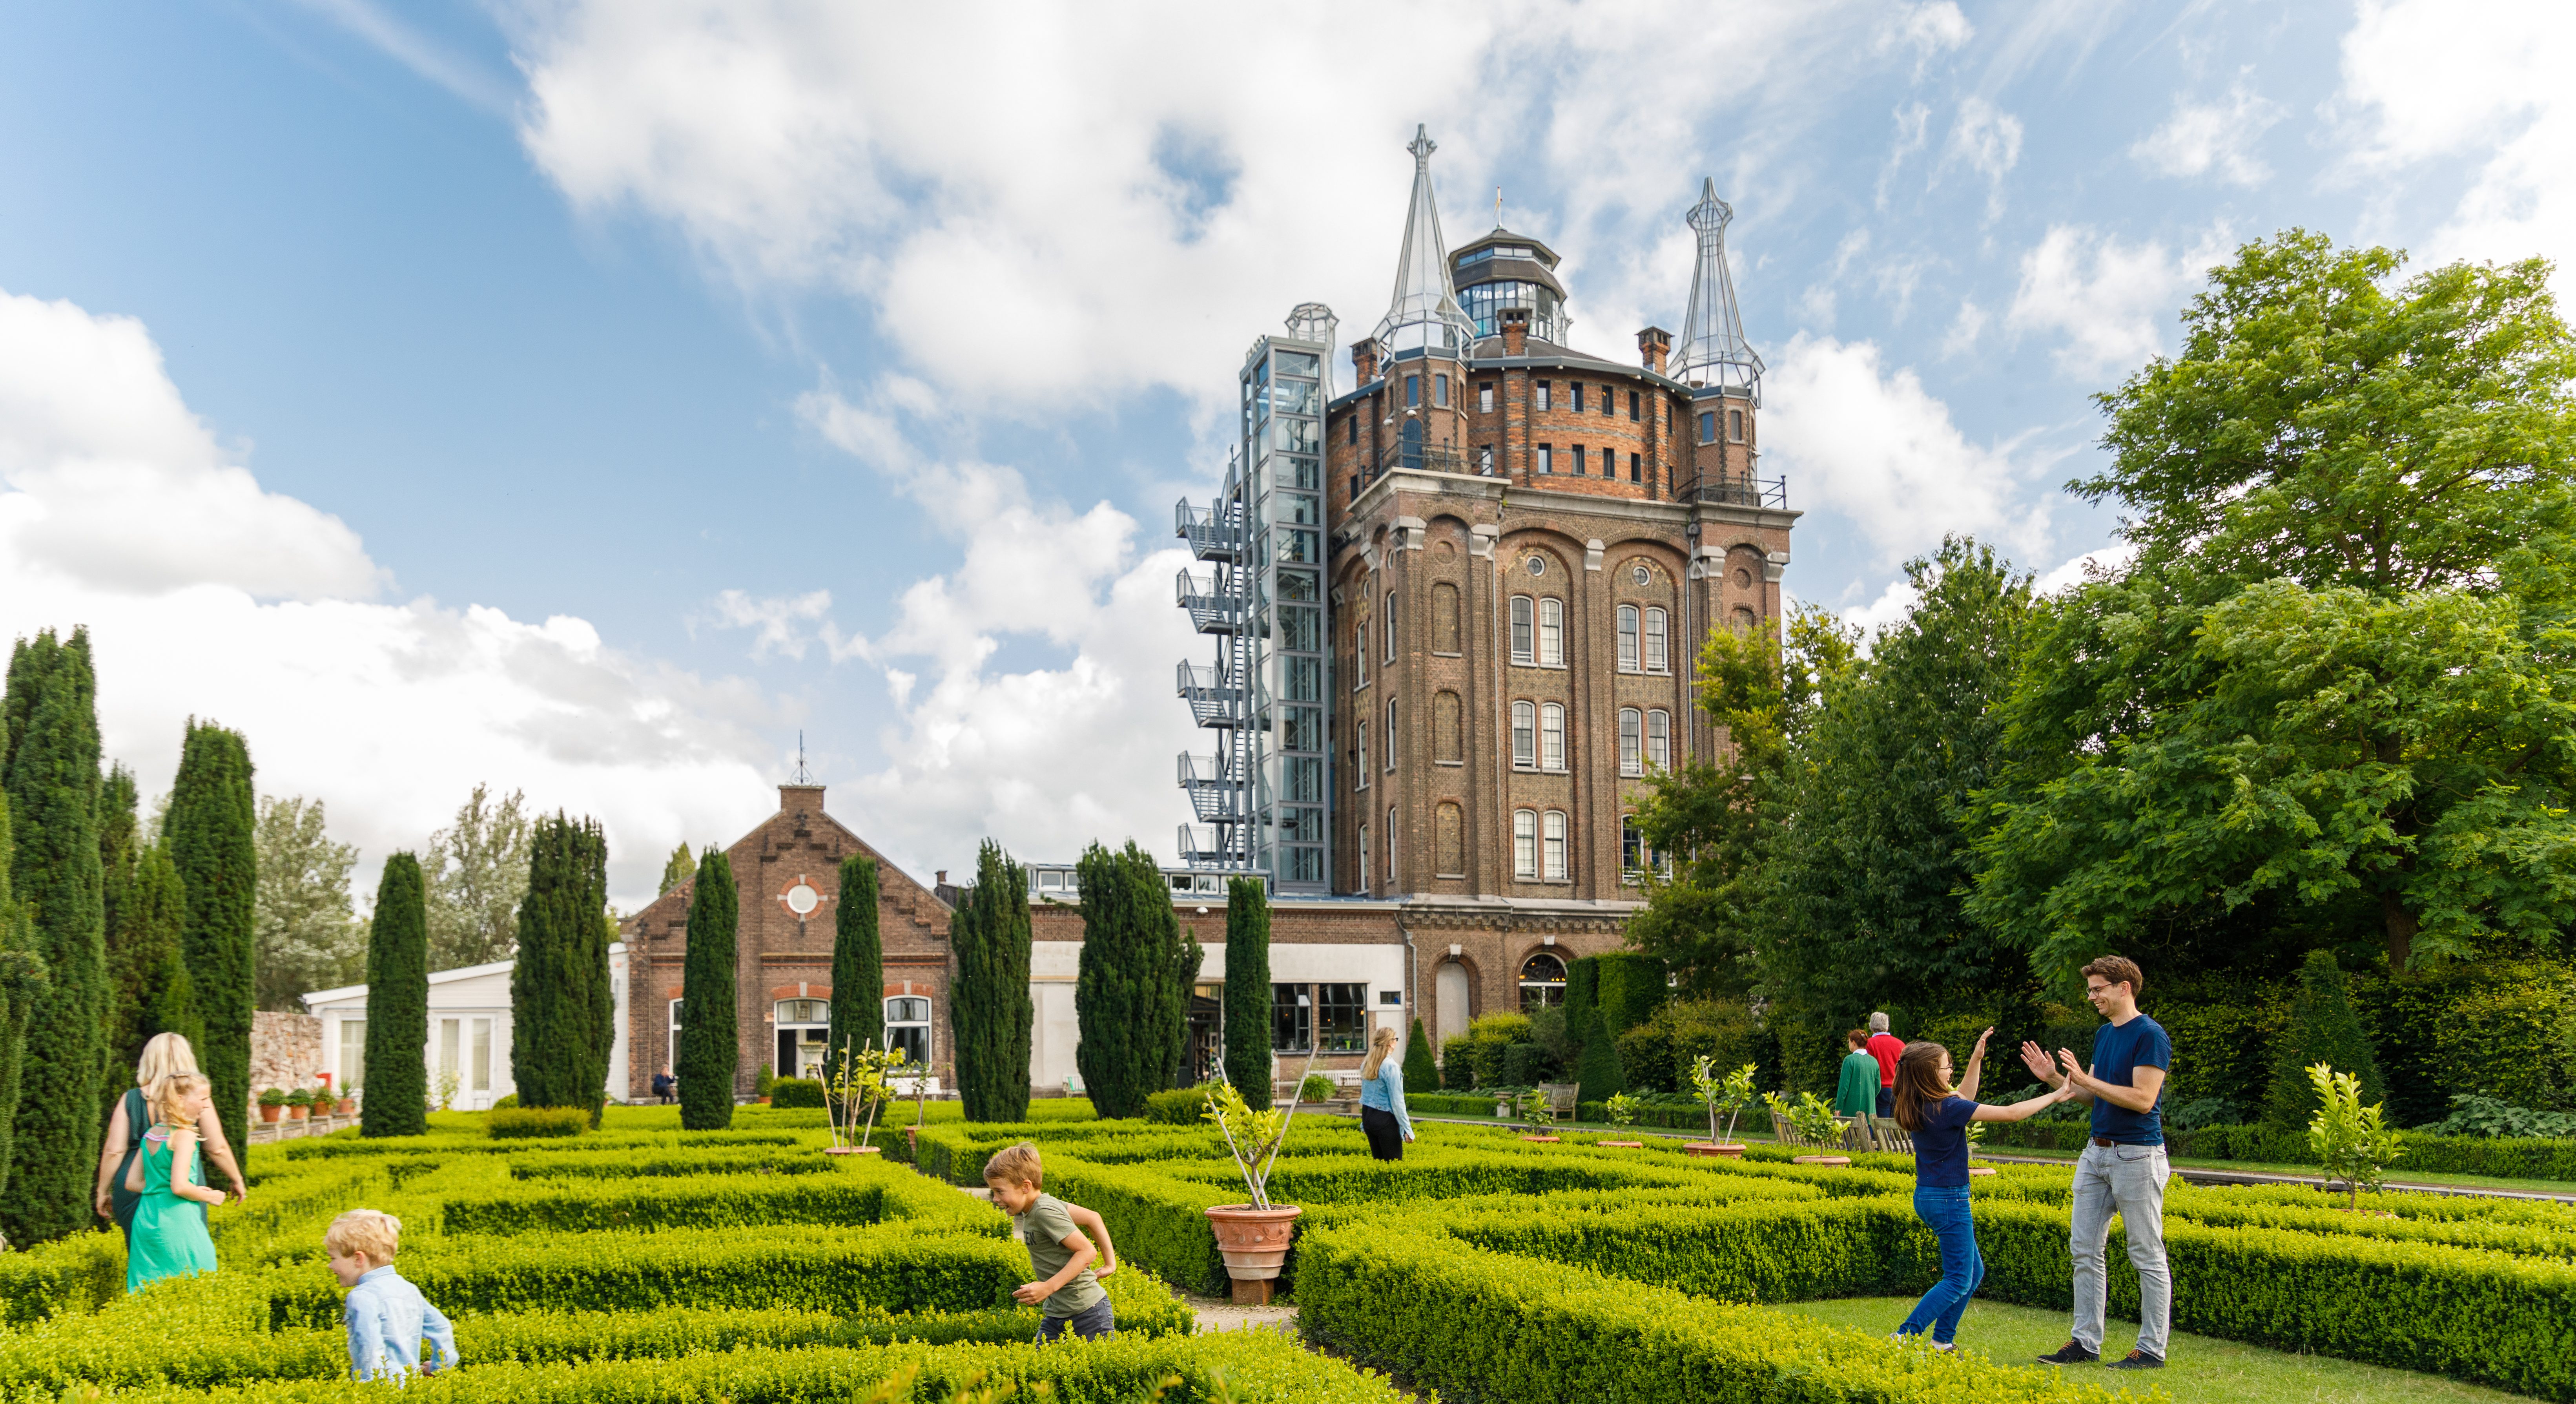 Hotel Villa Augustus - Dordrecht - tuin - watertoren